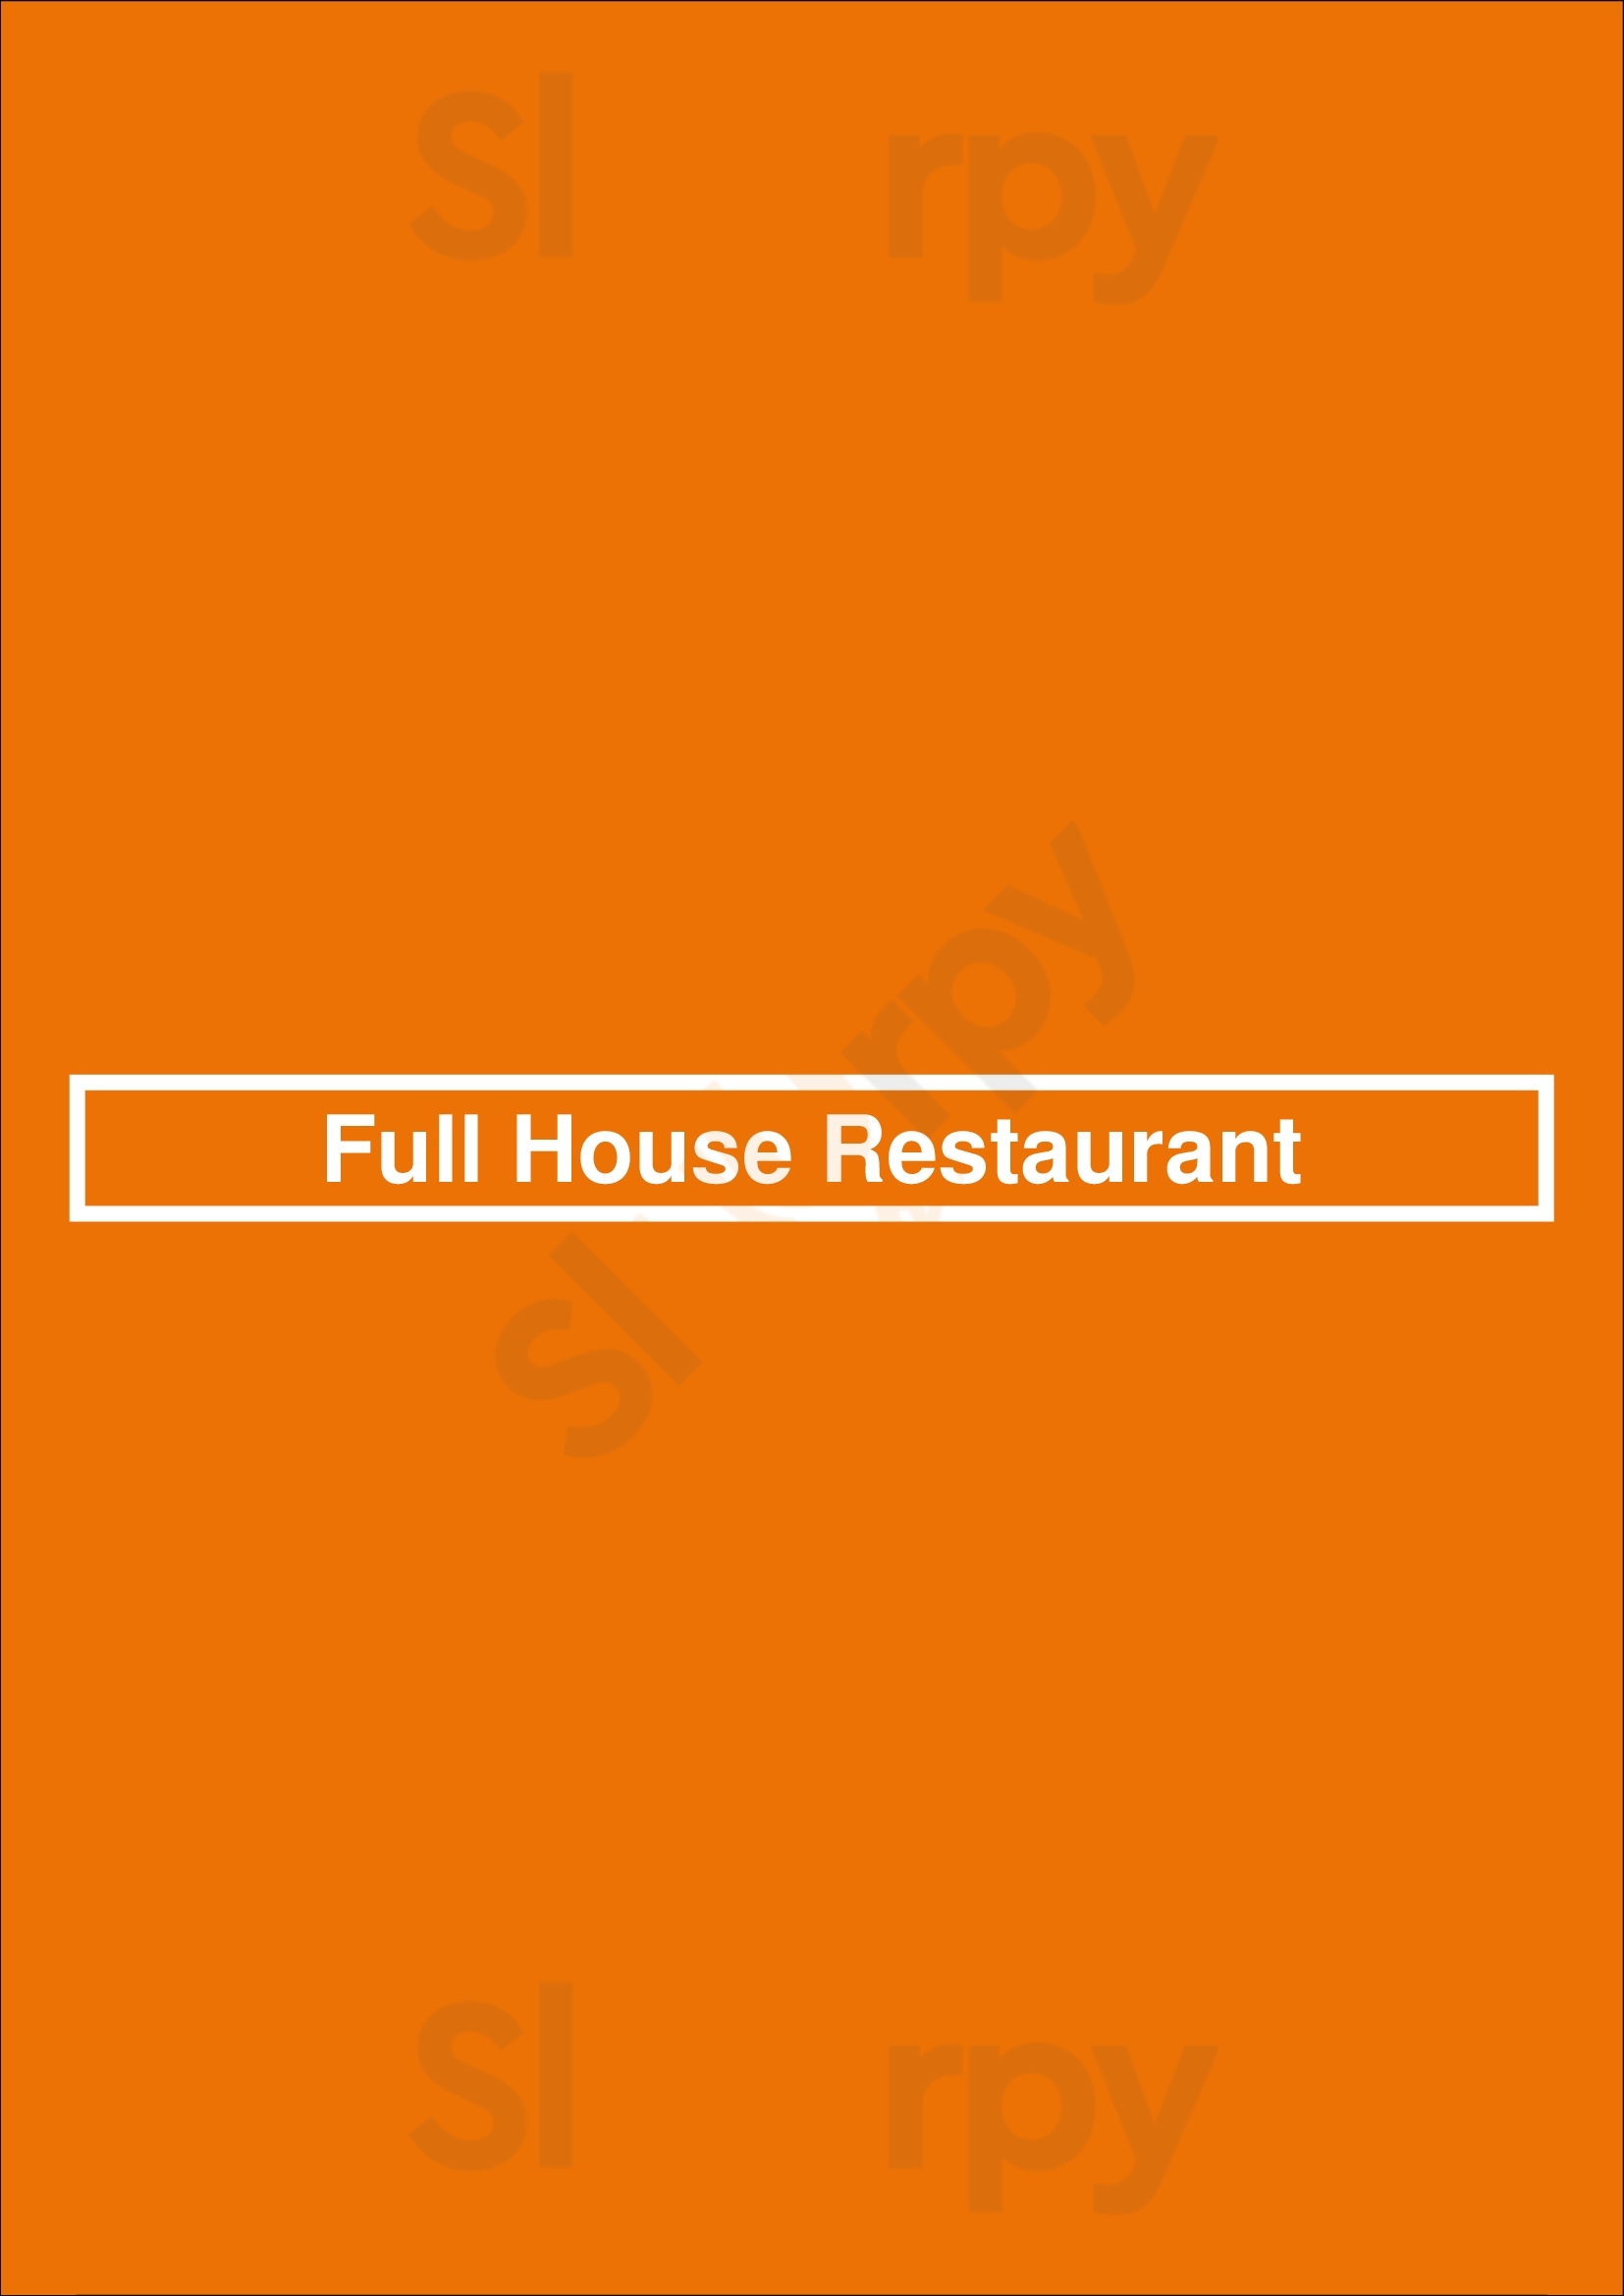 Full House Restaurant Los Angeles Menu - 1